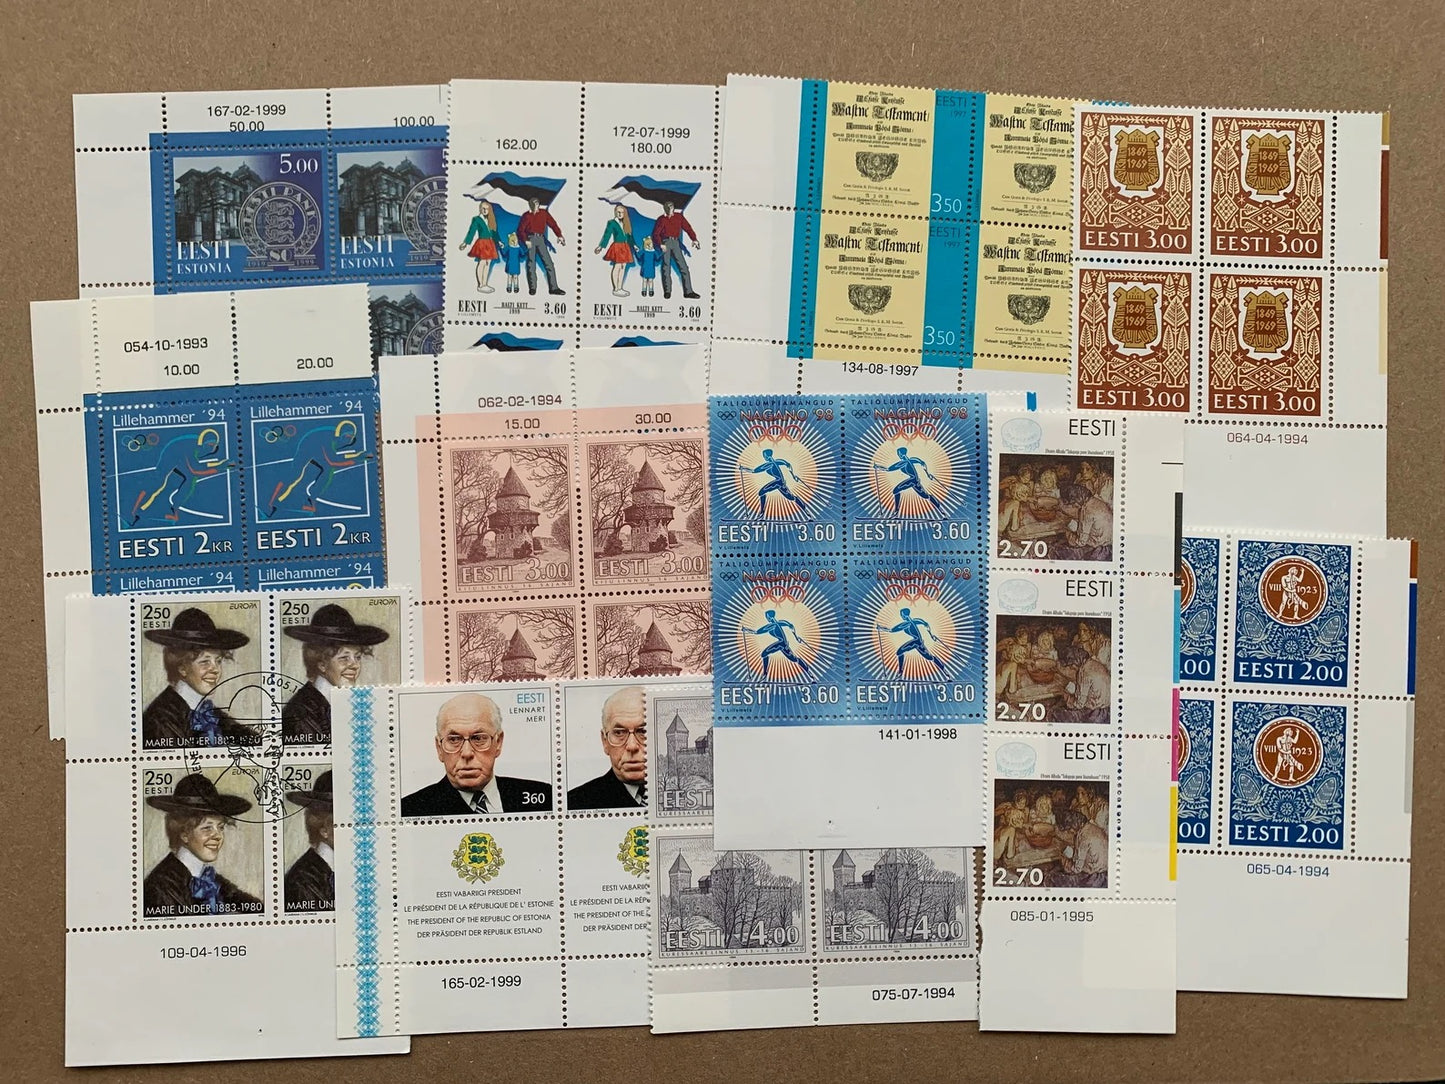 Estonian stamps unused blocks - Collection of 45 vintage postage stamps from 1992-1999 - MNH Estonian stamps.